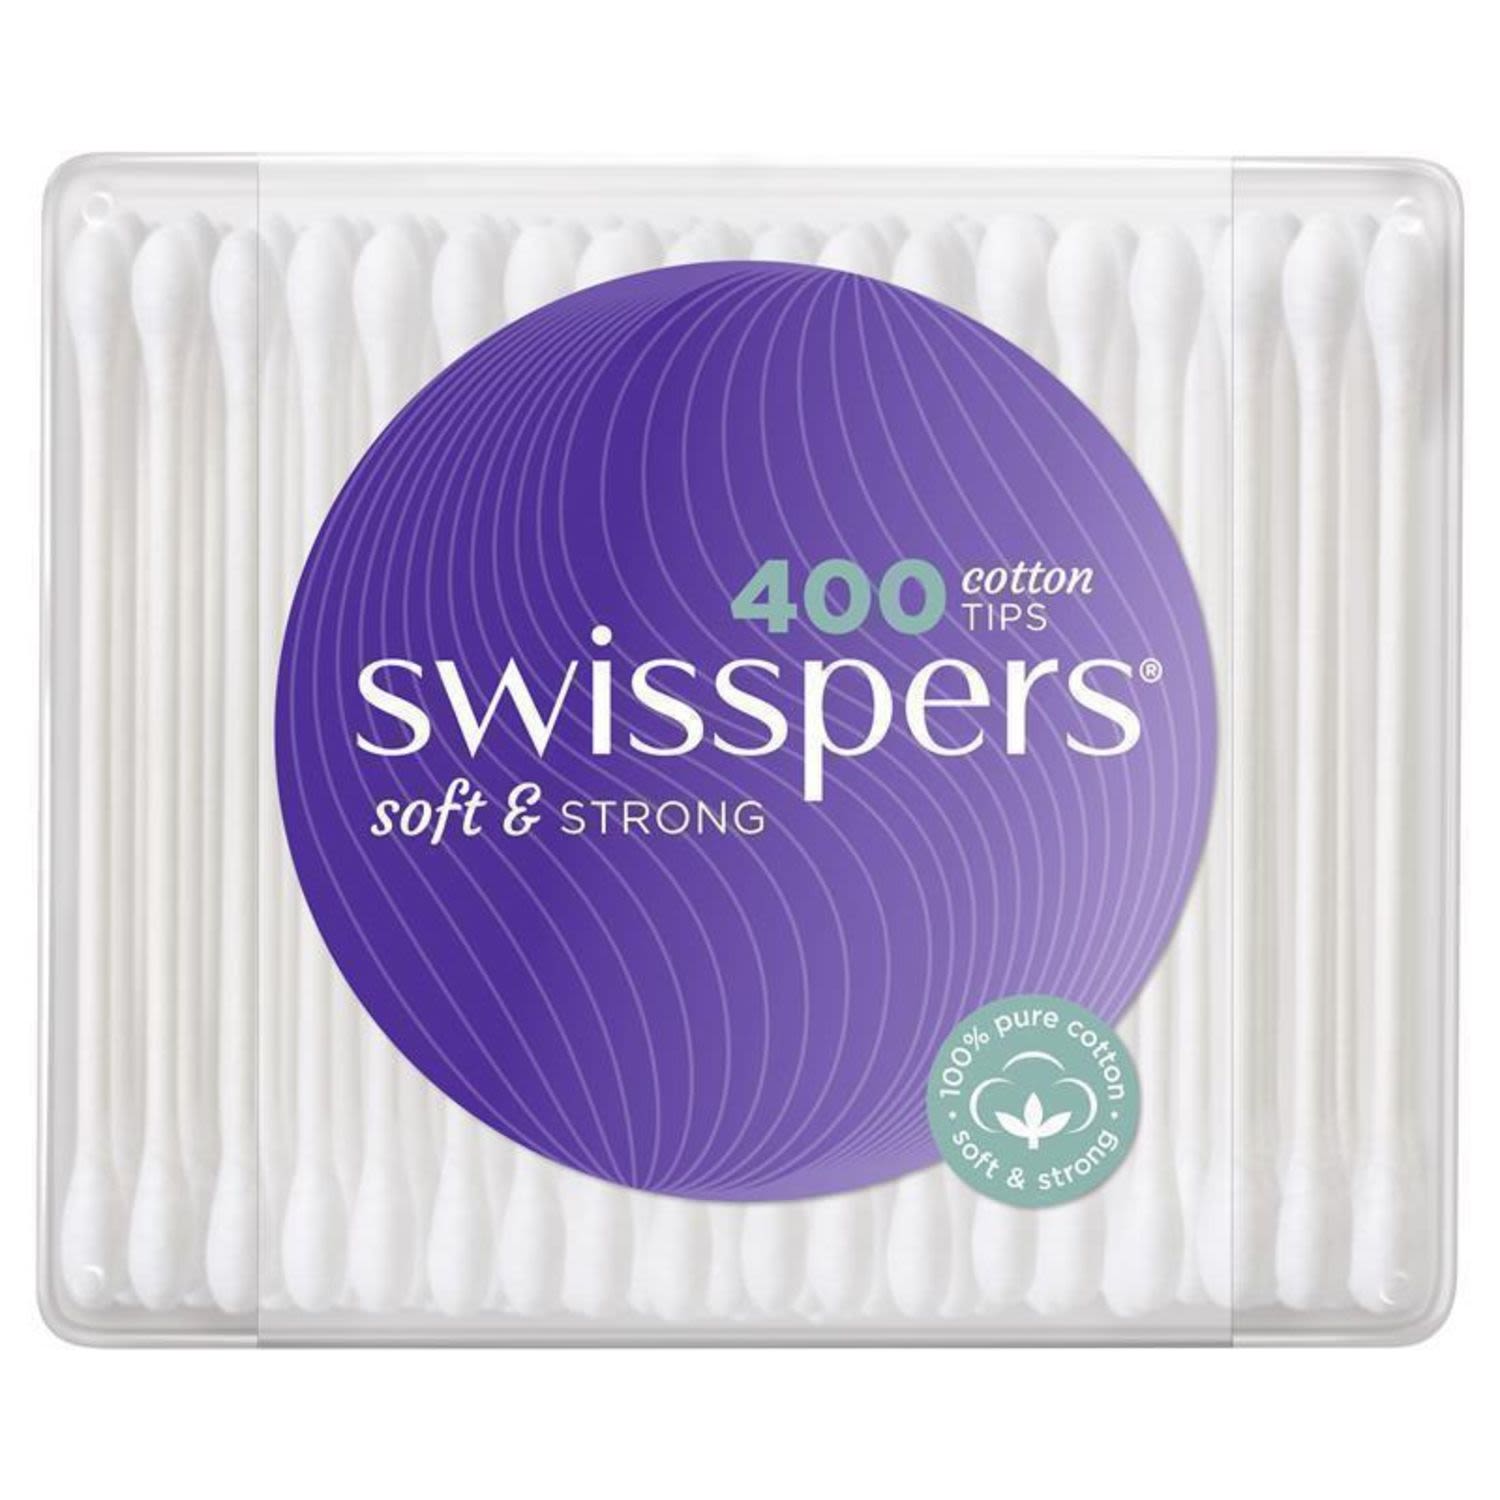 Swisspers Cotton Tips, 400 Each